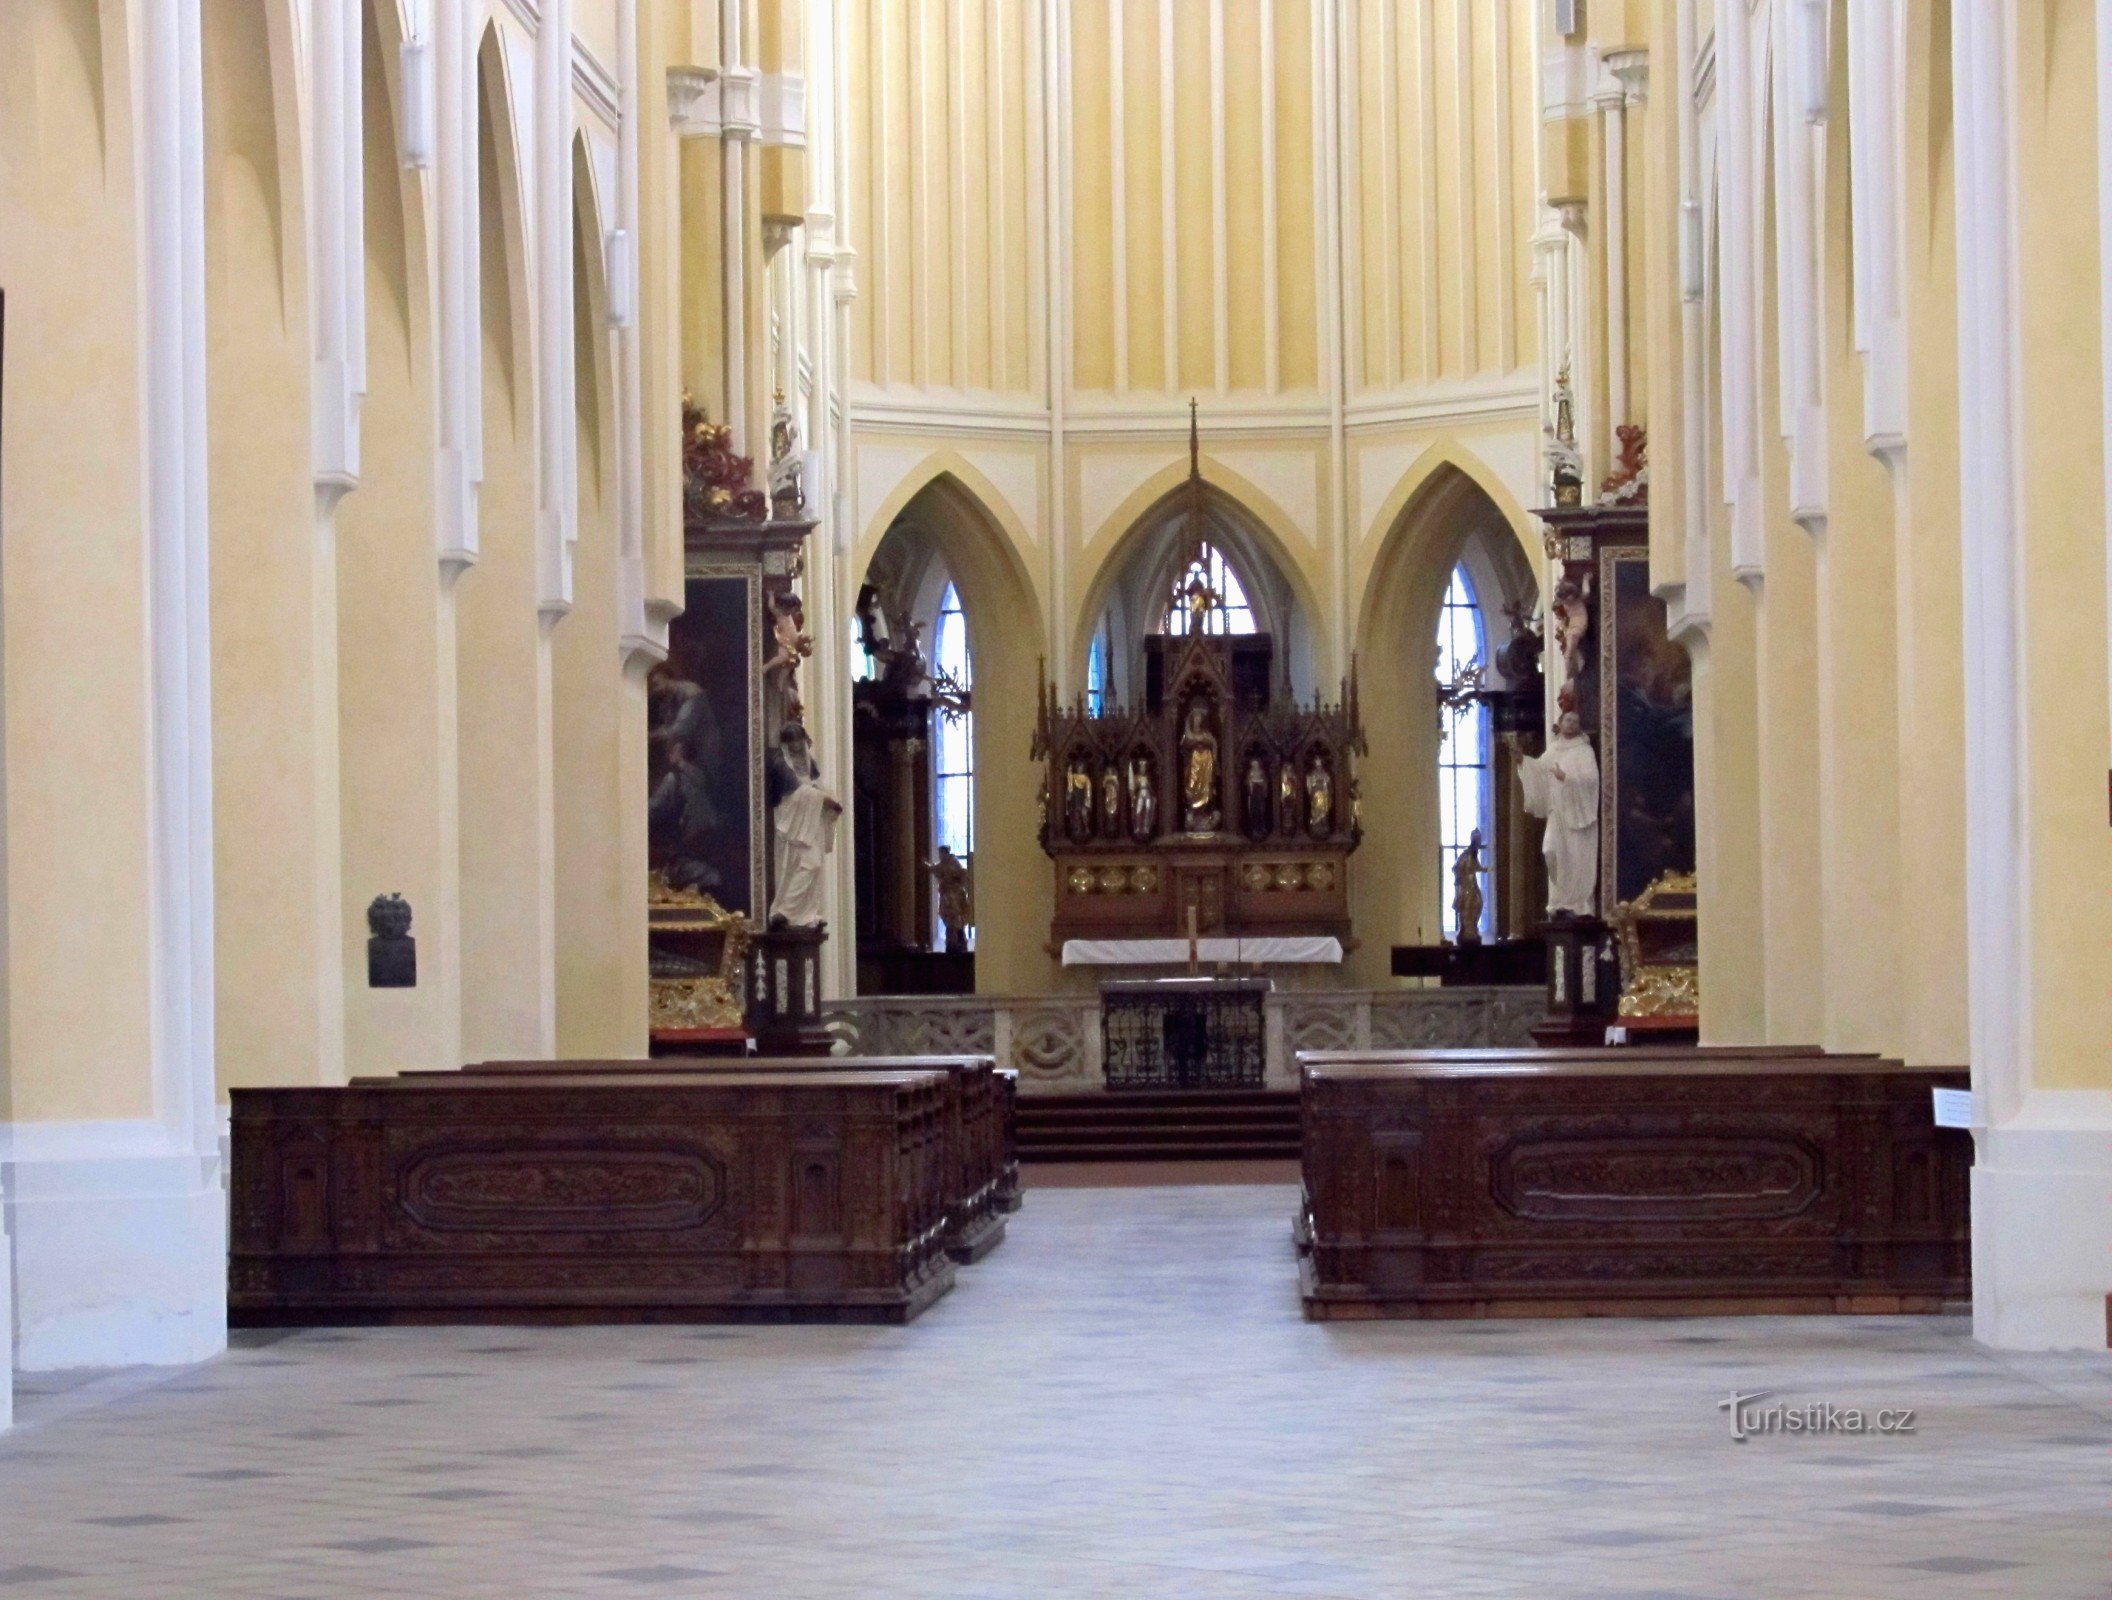 02 Interior de la catedral